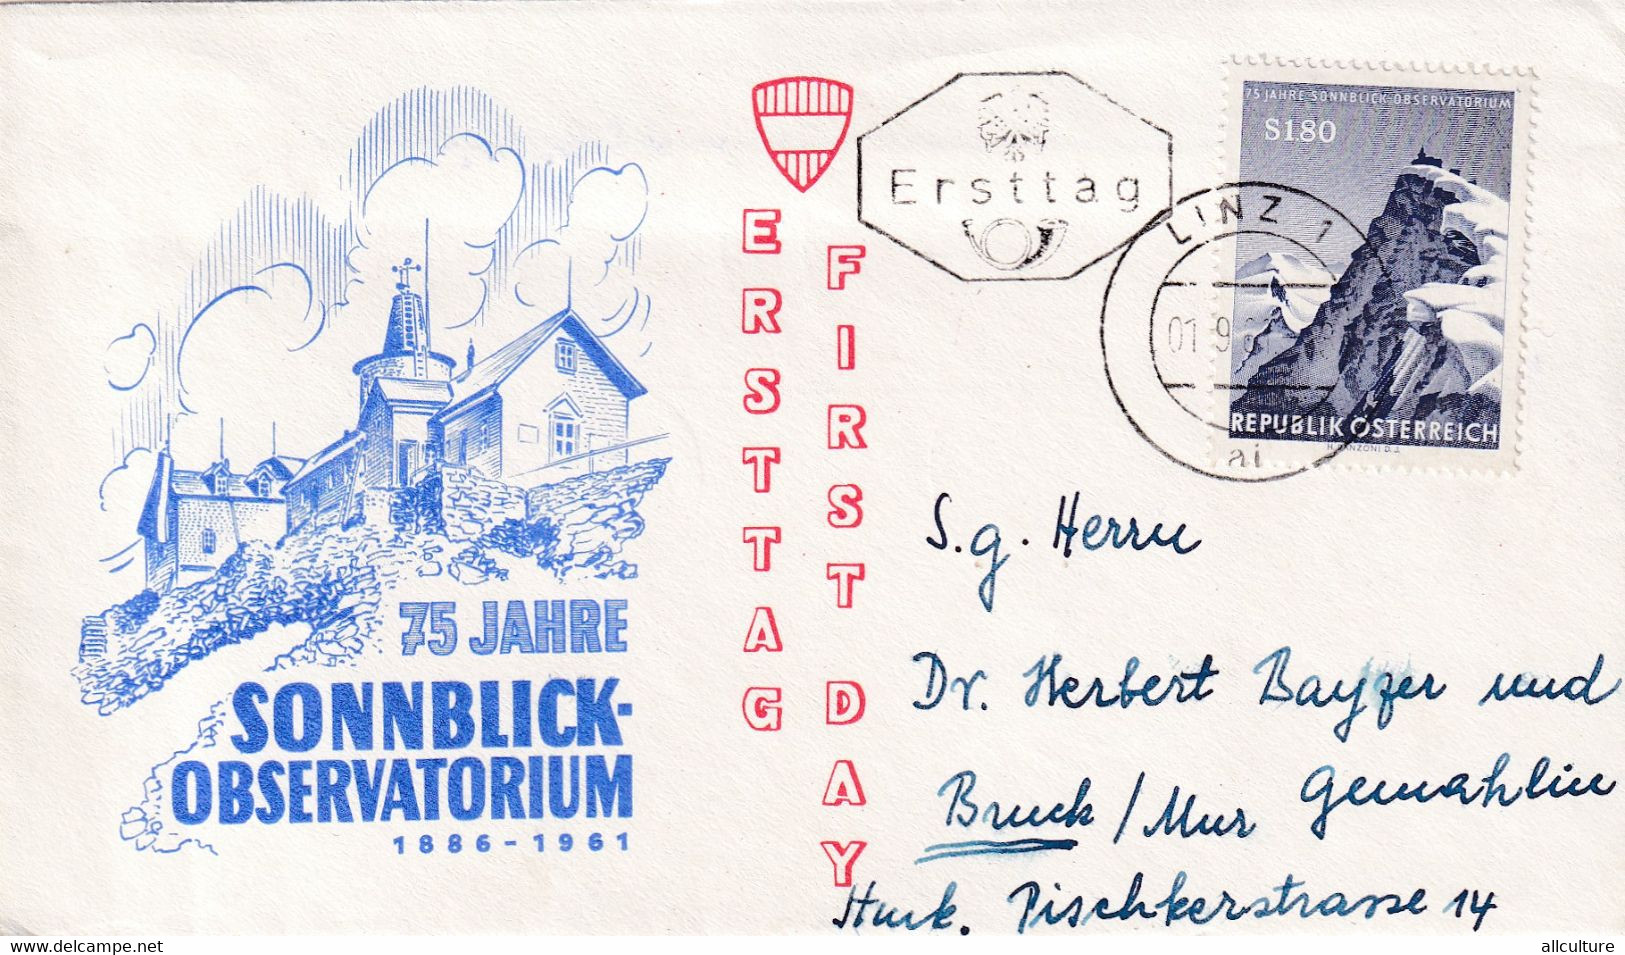 A8384- SONNBLICK OBSERVATORIUM ERSTTAG 1886-1961, LINZ 1961 REPUBLIK OESTERREICH USED STAMP ON COVER - Briefe U. Dokumente